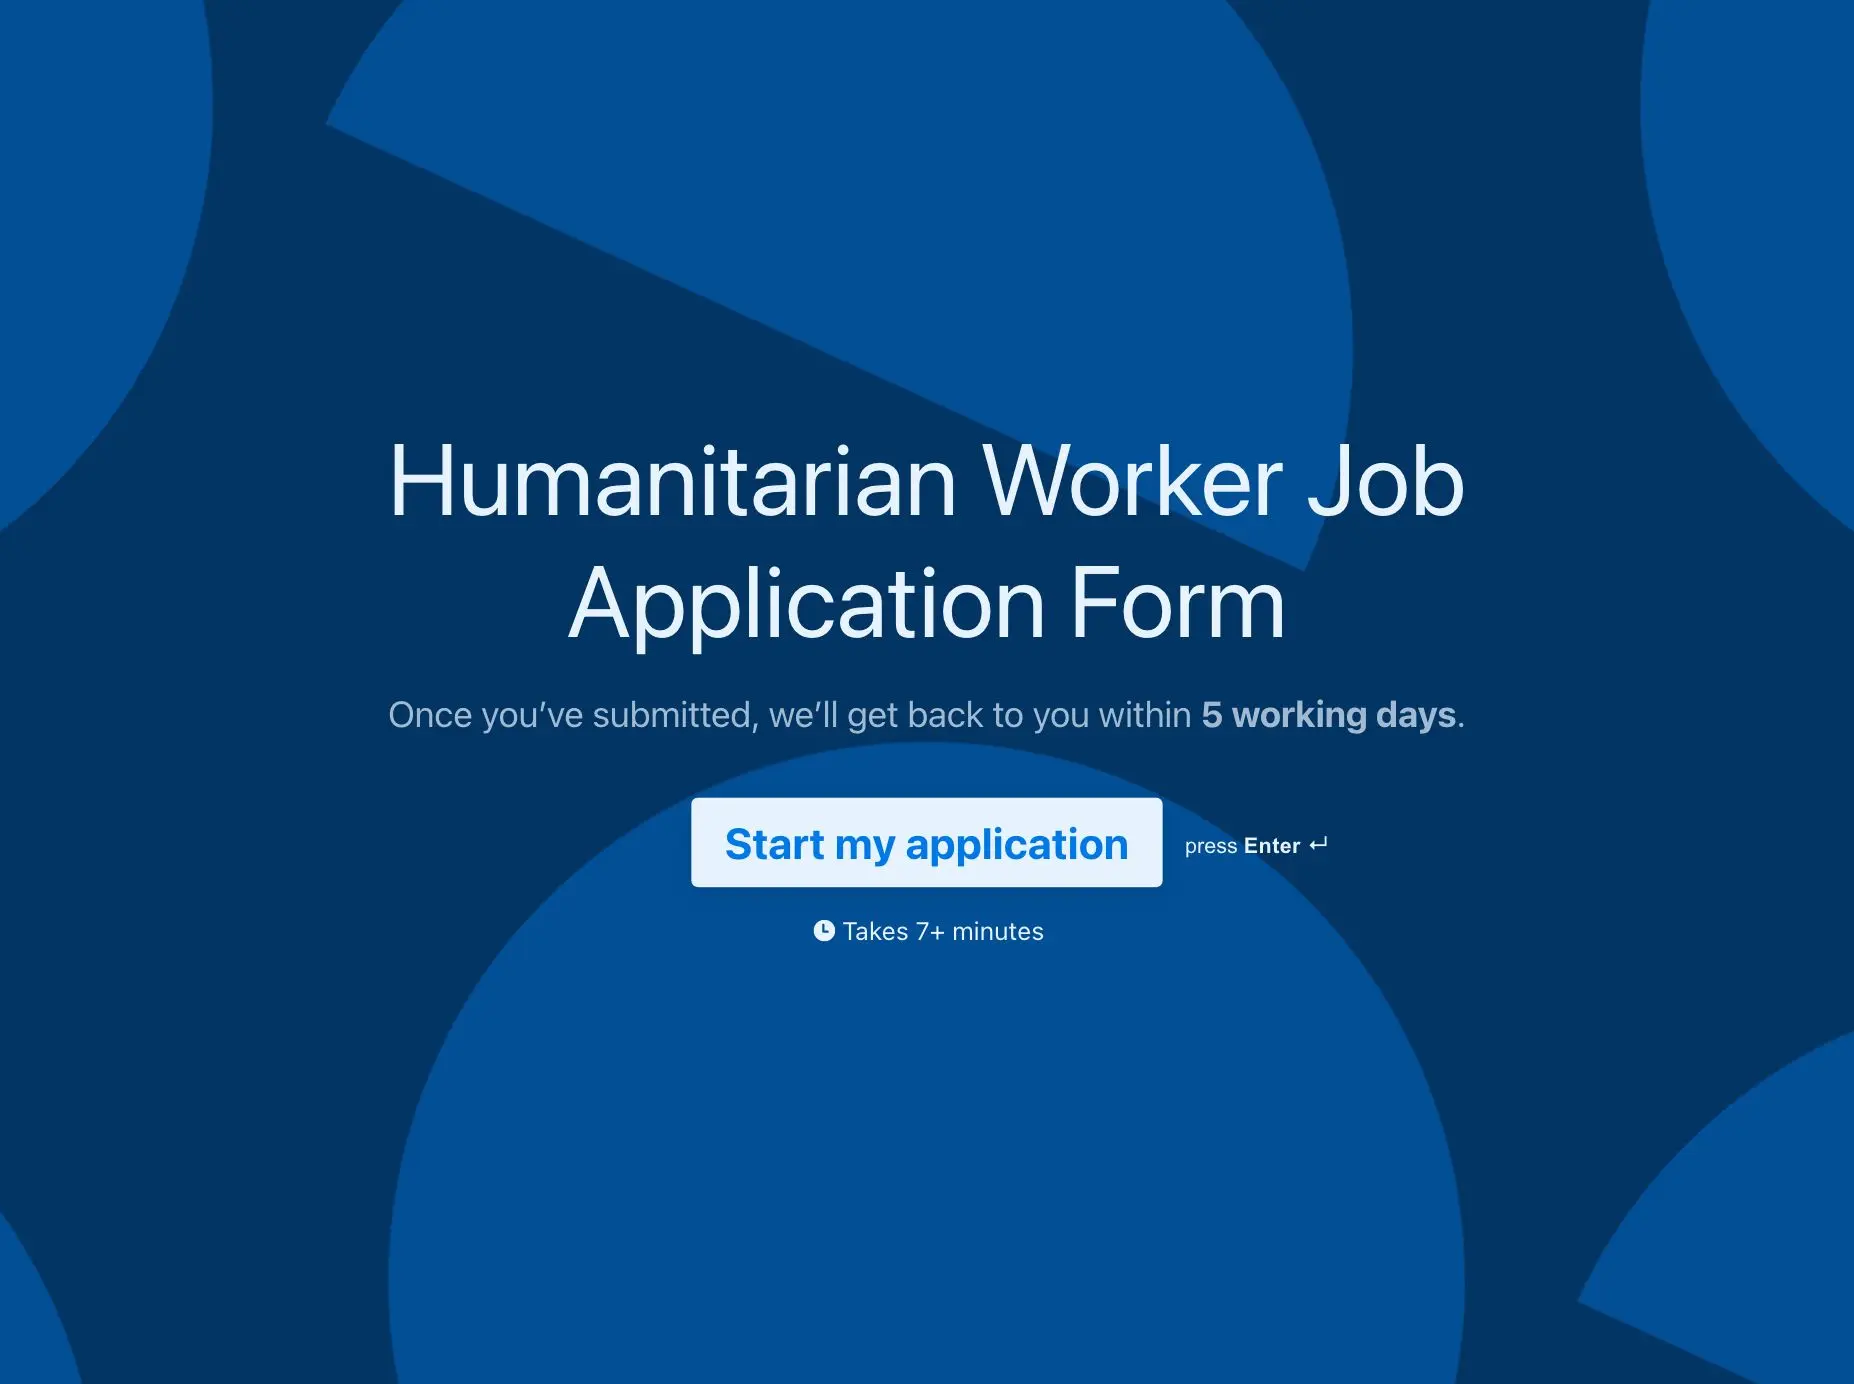 Humanitarian Worker Job Application Form Template Hero